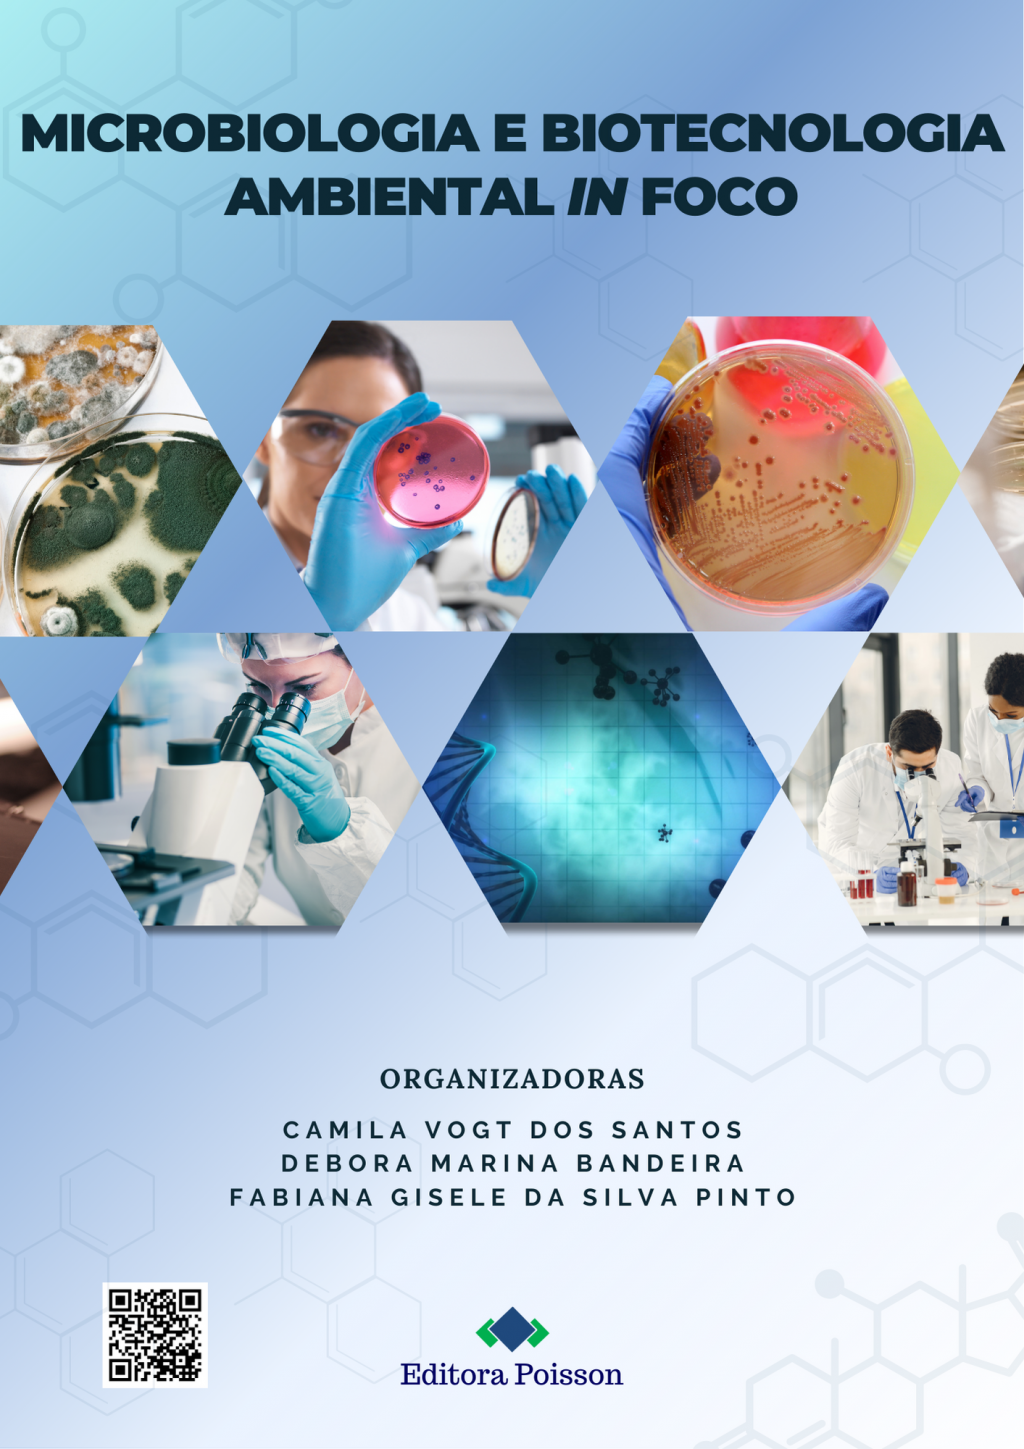 Microbiologia e Biotecnologia Ambiental in foco – Volume 1